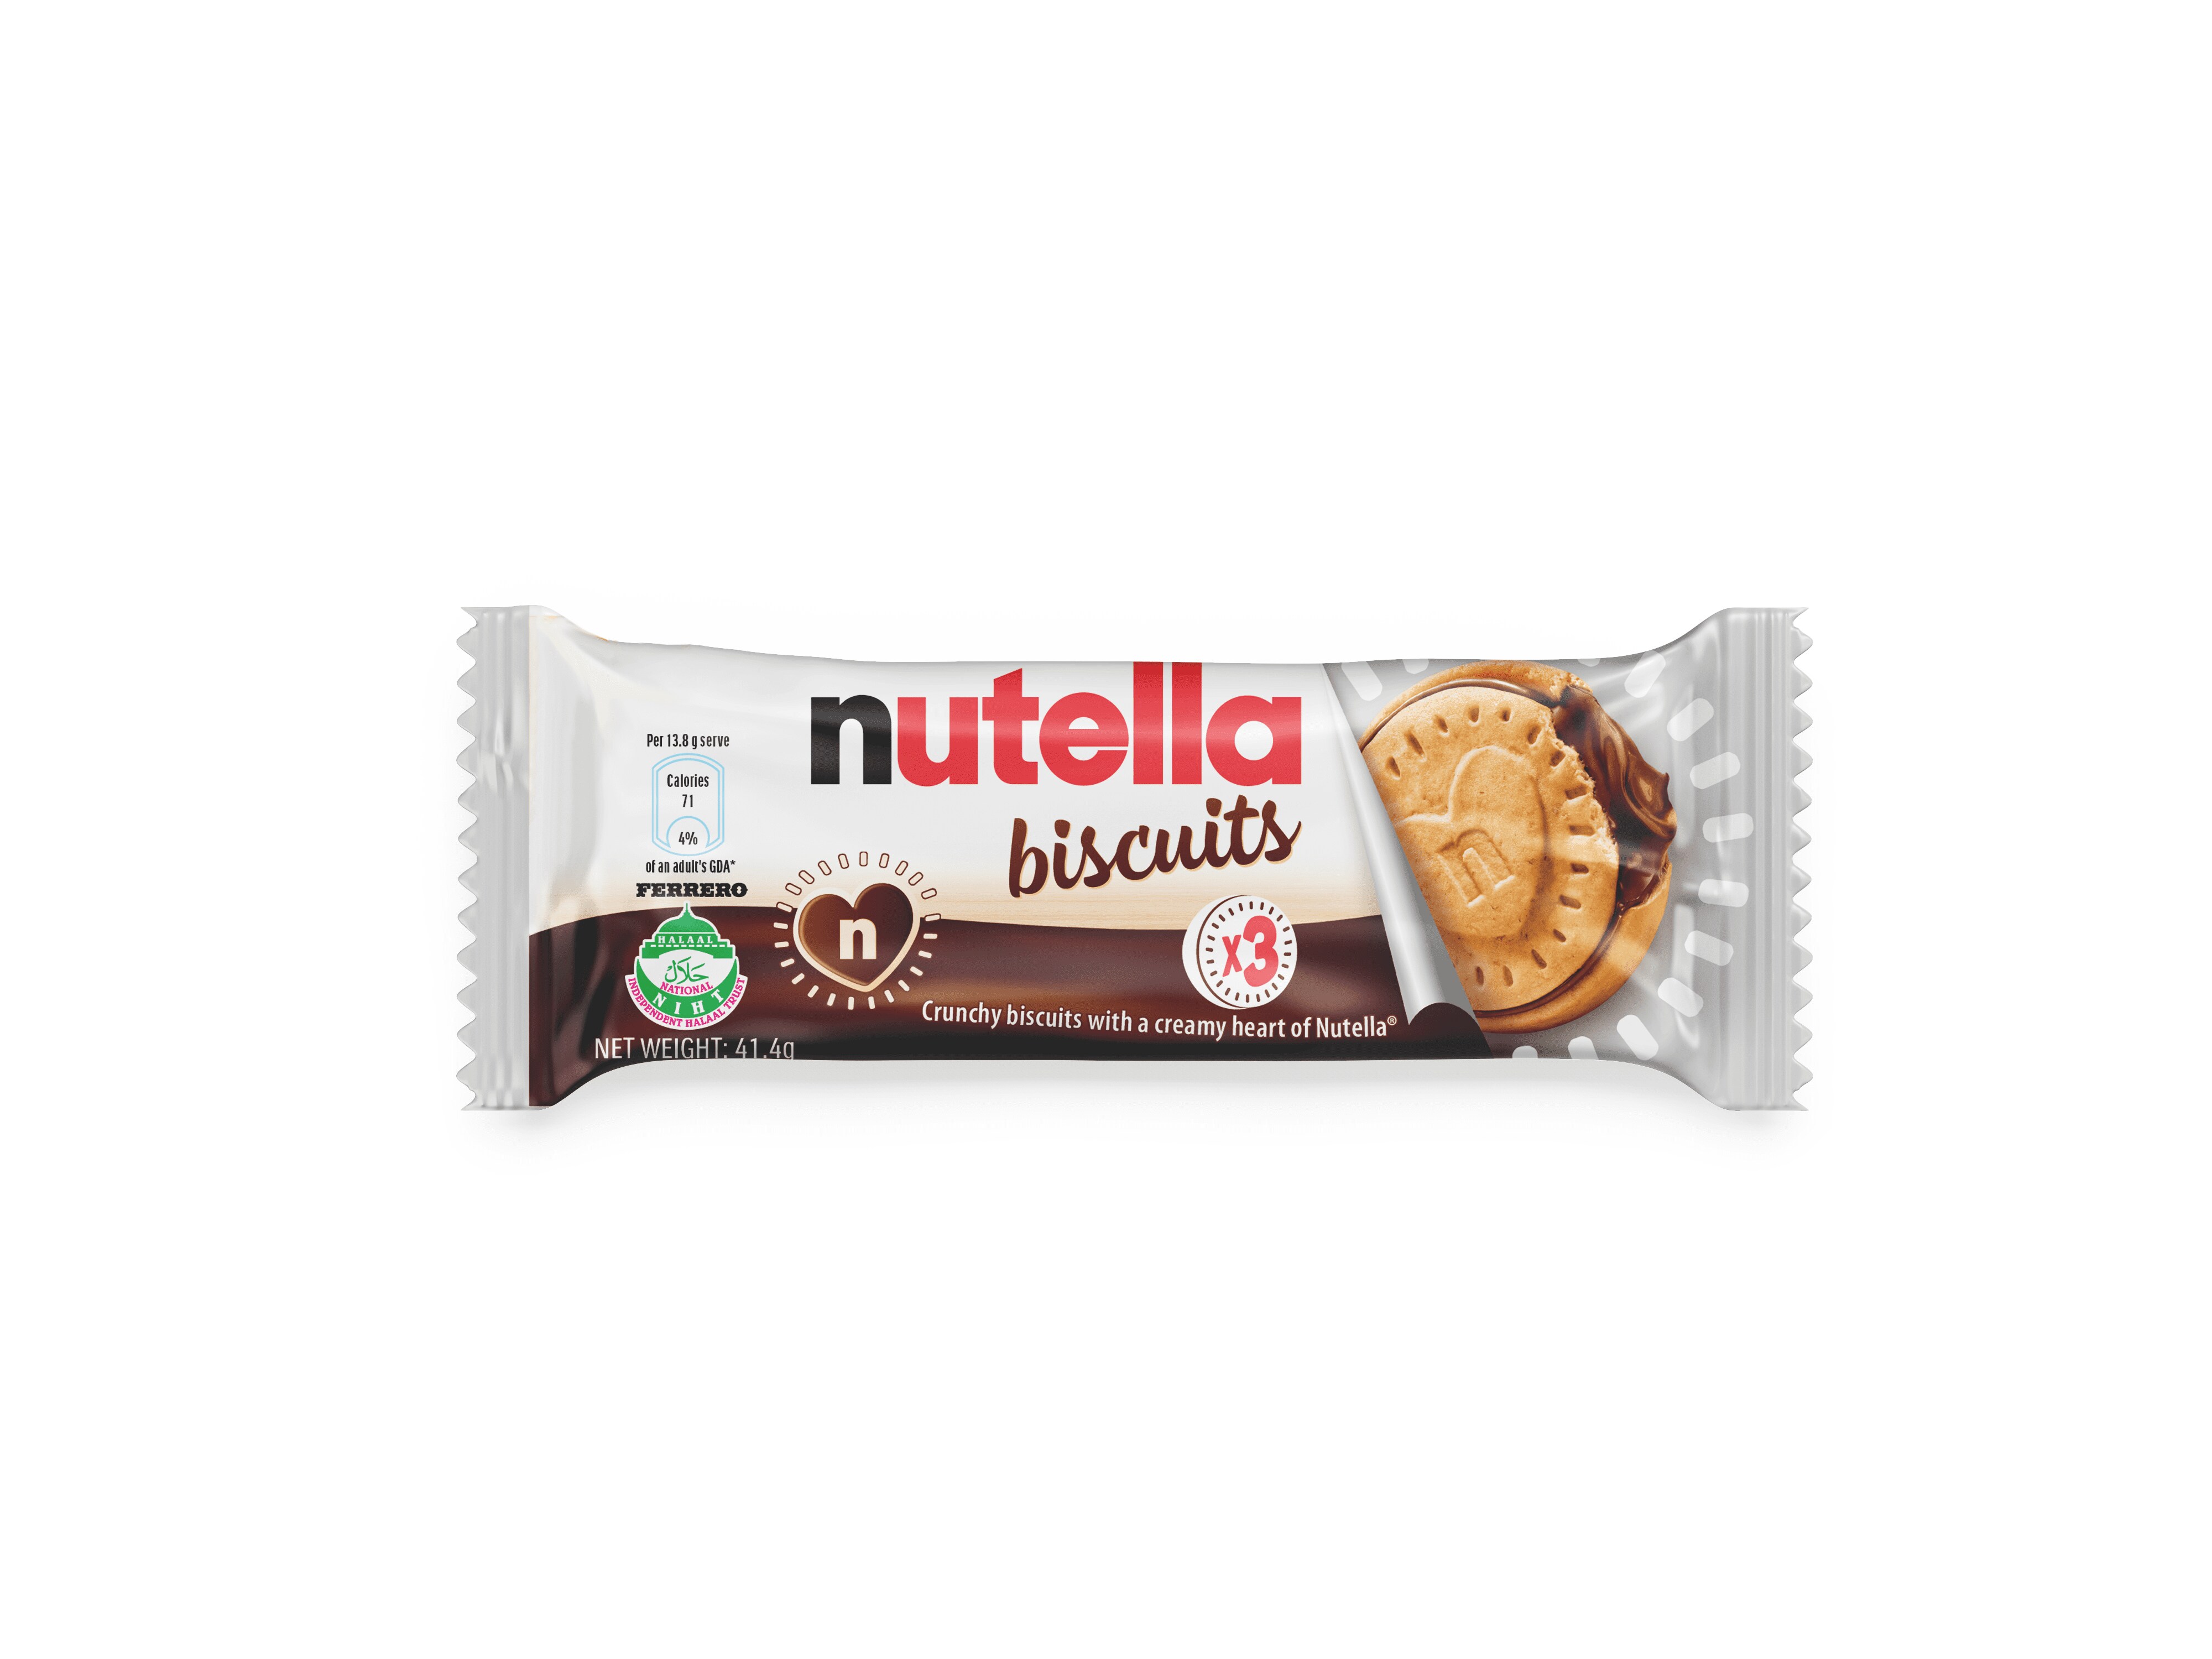 Nutella biscuits - Break